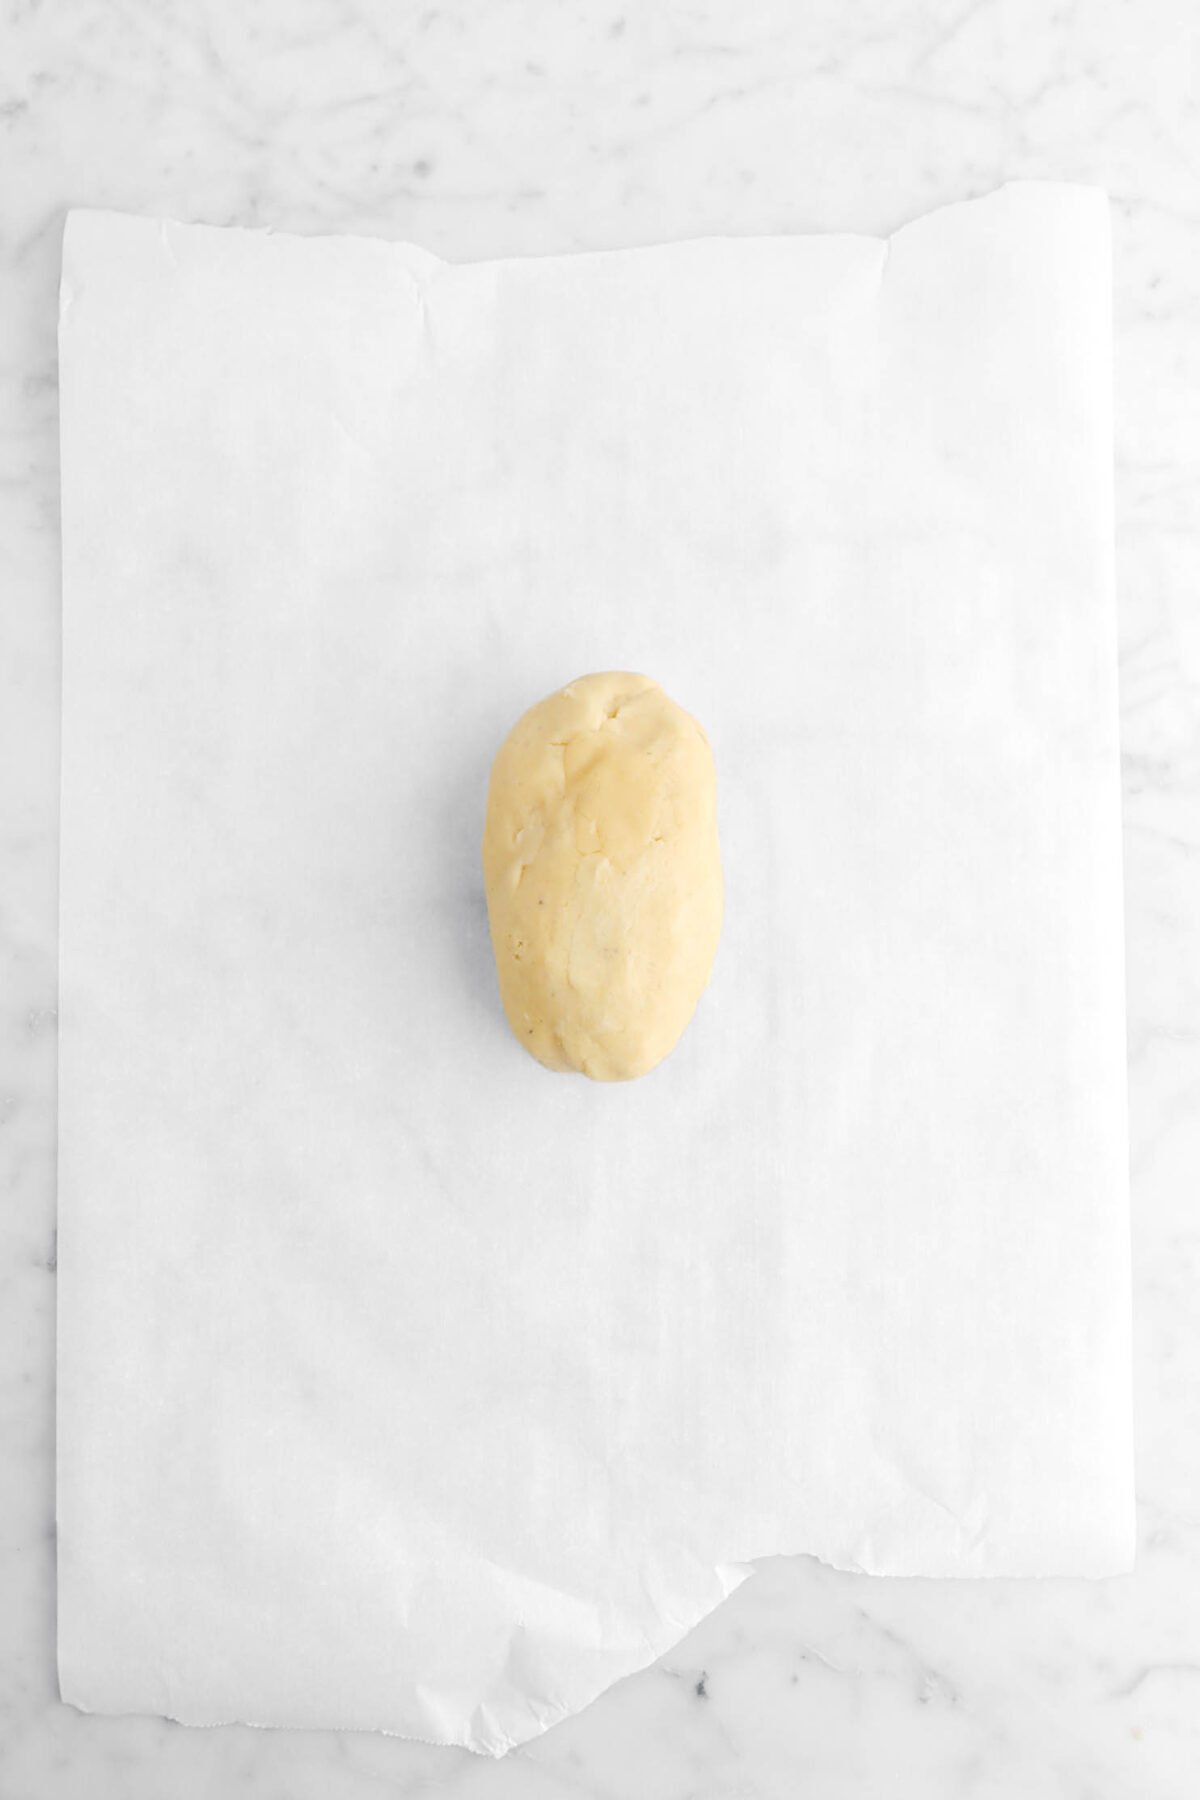 shortbread dough in oval shape on parchment paper.